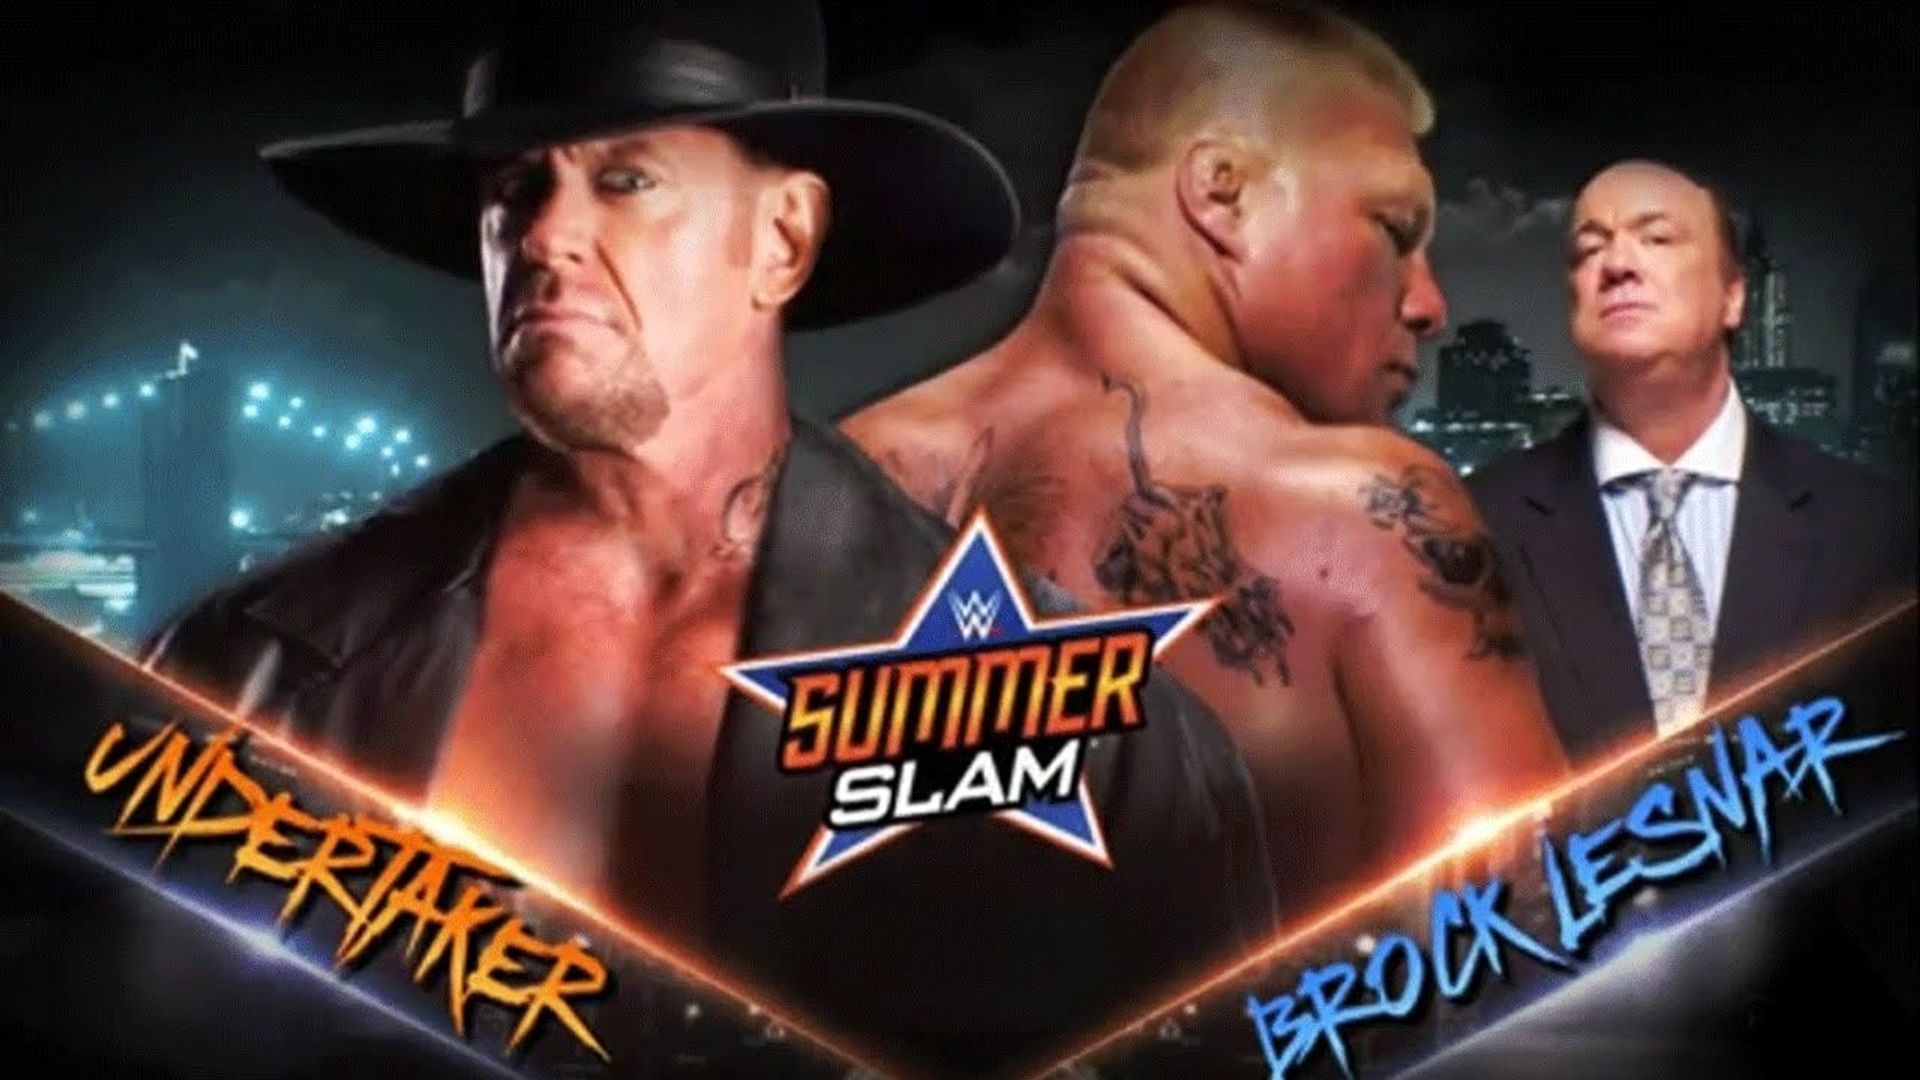 WWE: Summerslam background